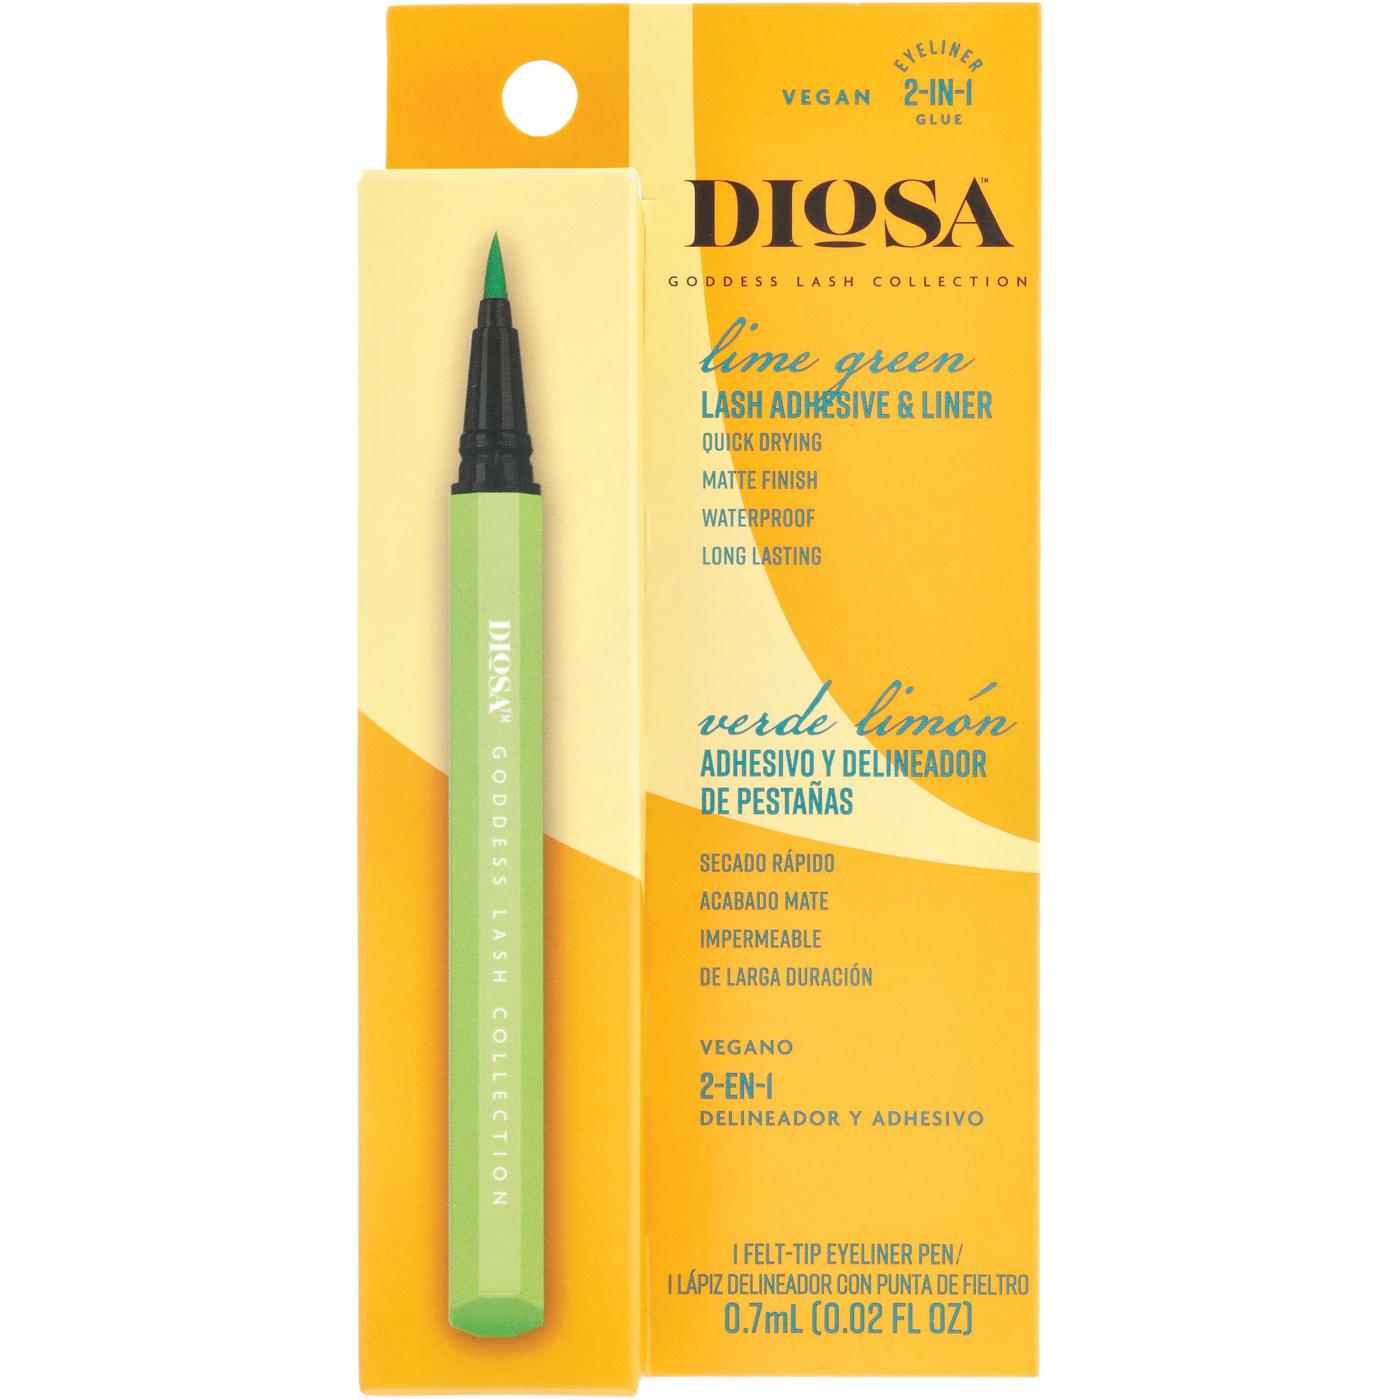 Diosa Lash Adhesive & Liner – Lime Green; image 1 of 5